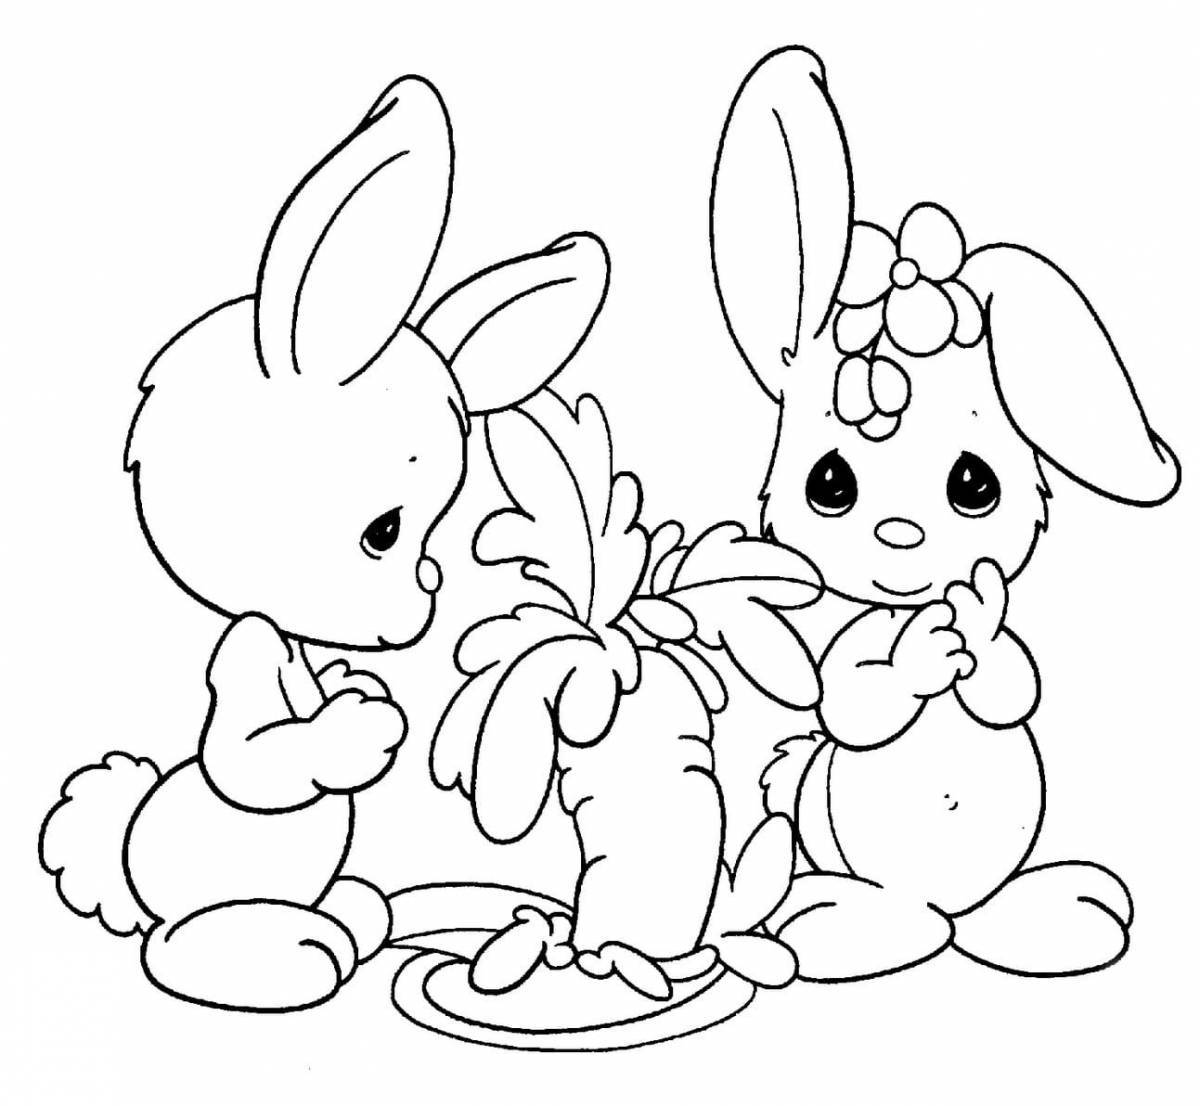 Playful bunny coloring book